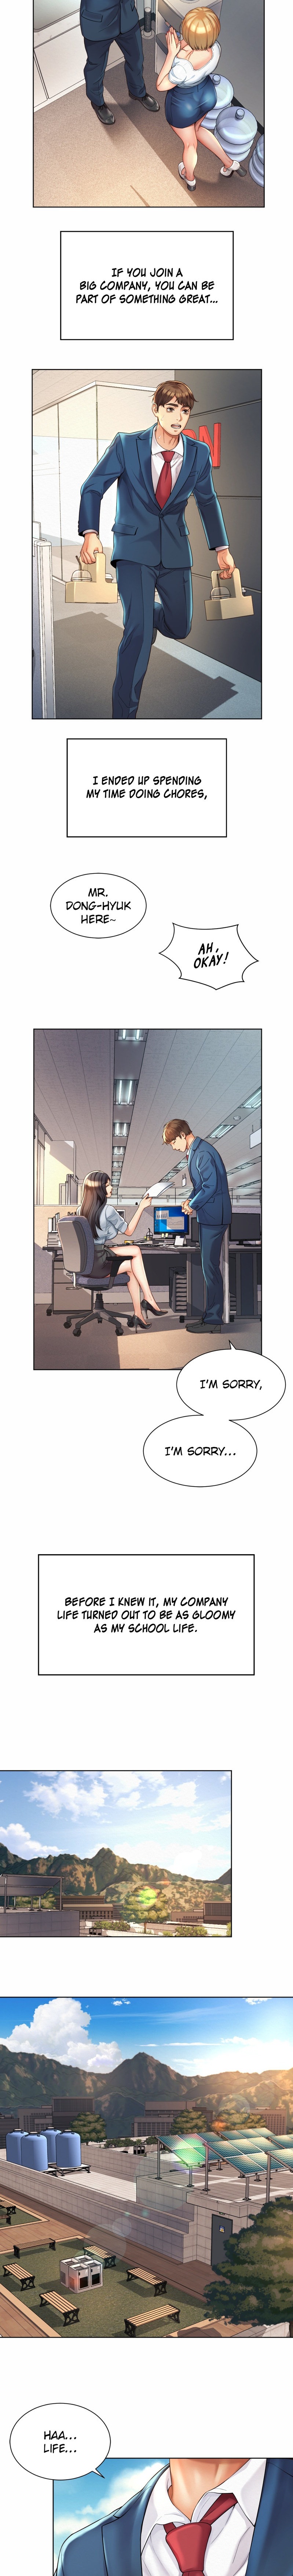 Workplace Romance - Chapter 2 Page 15